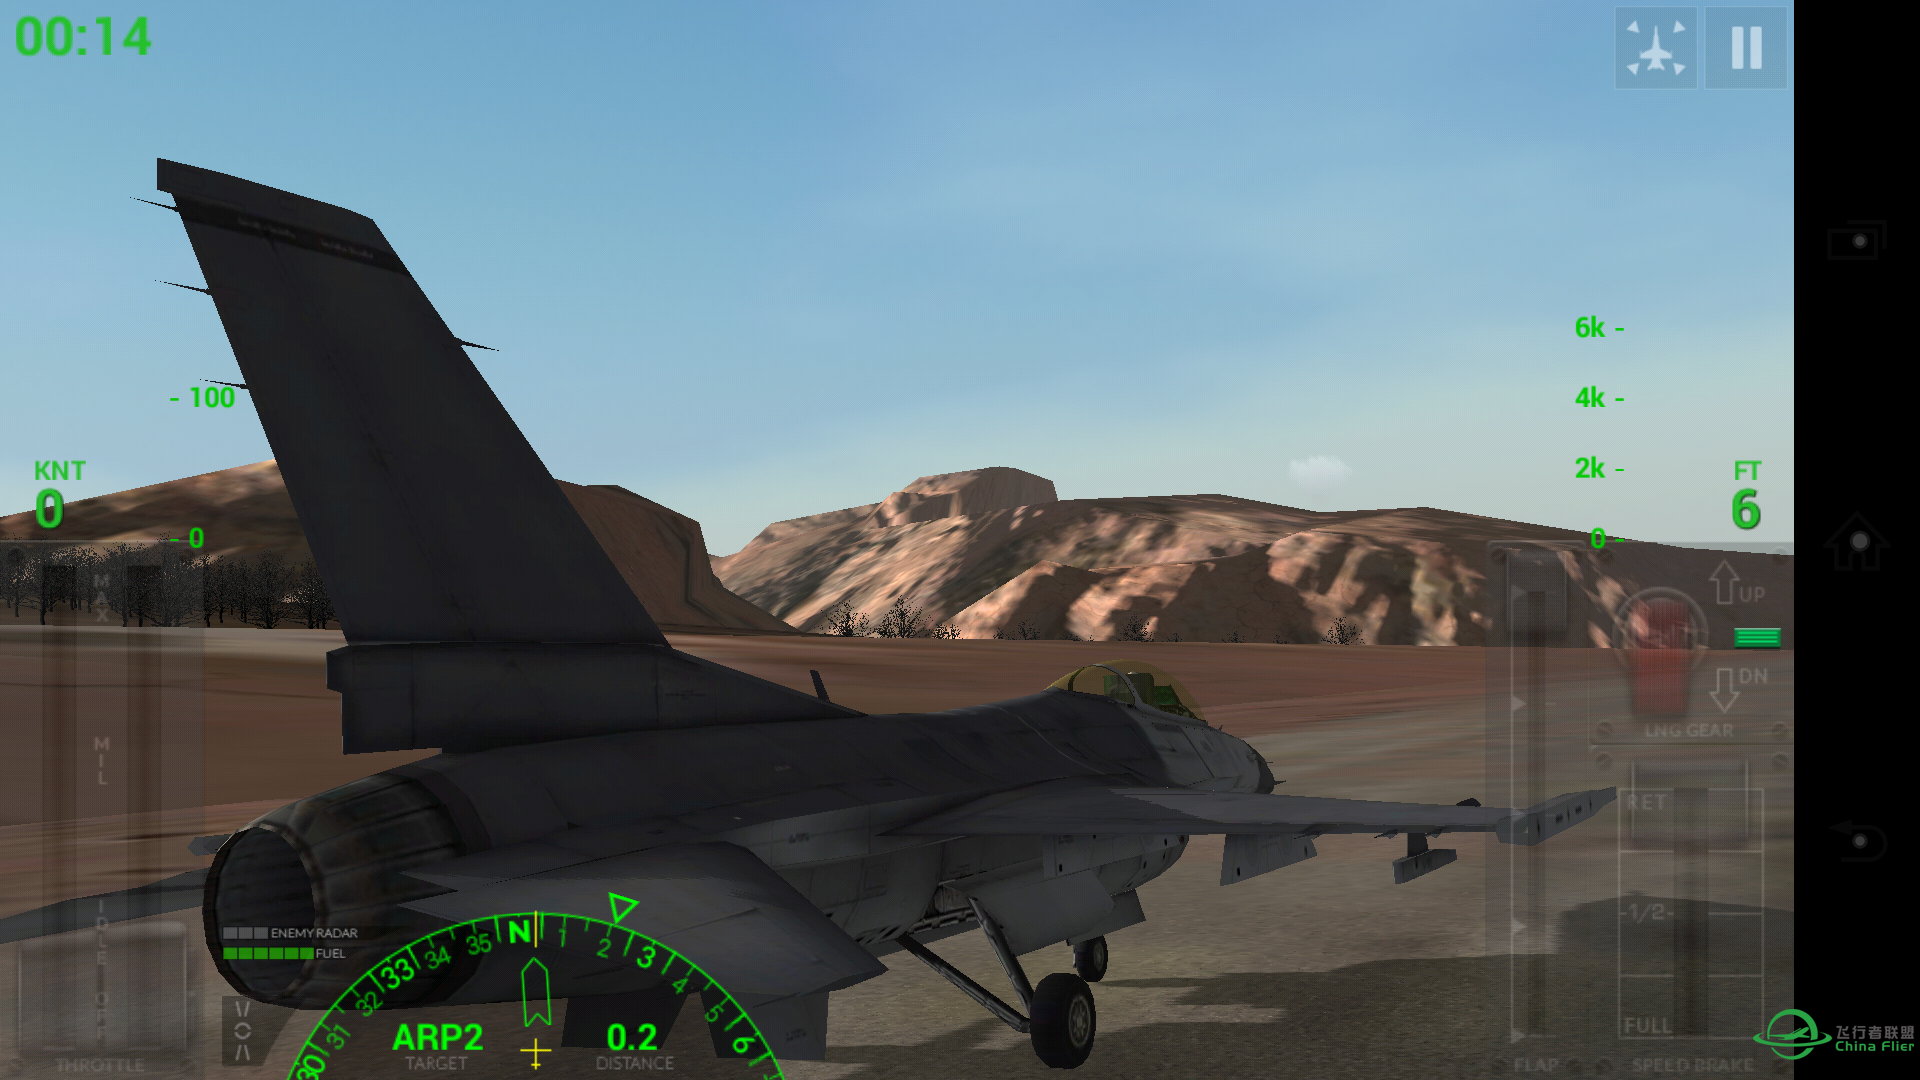 [截图而已]F18 Carrier Landing2 Pro-2737 